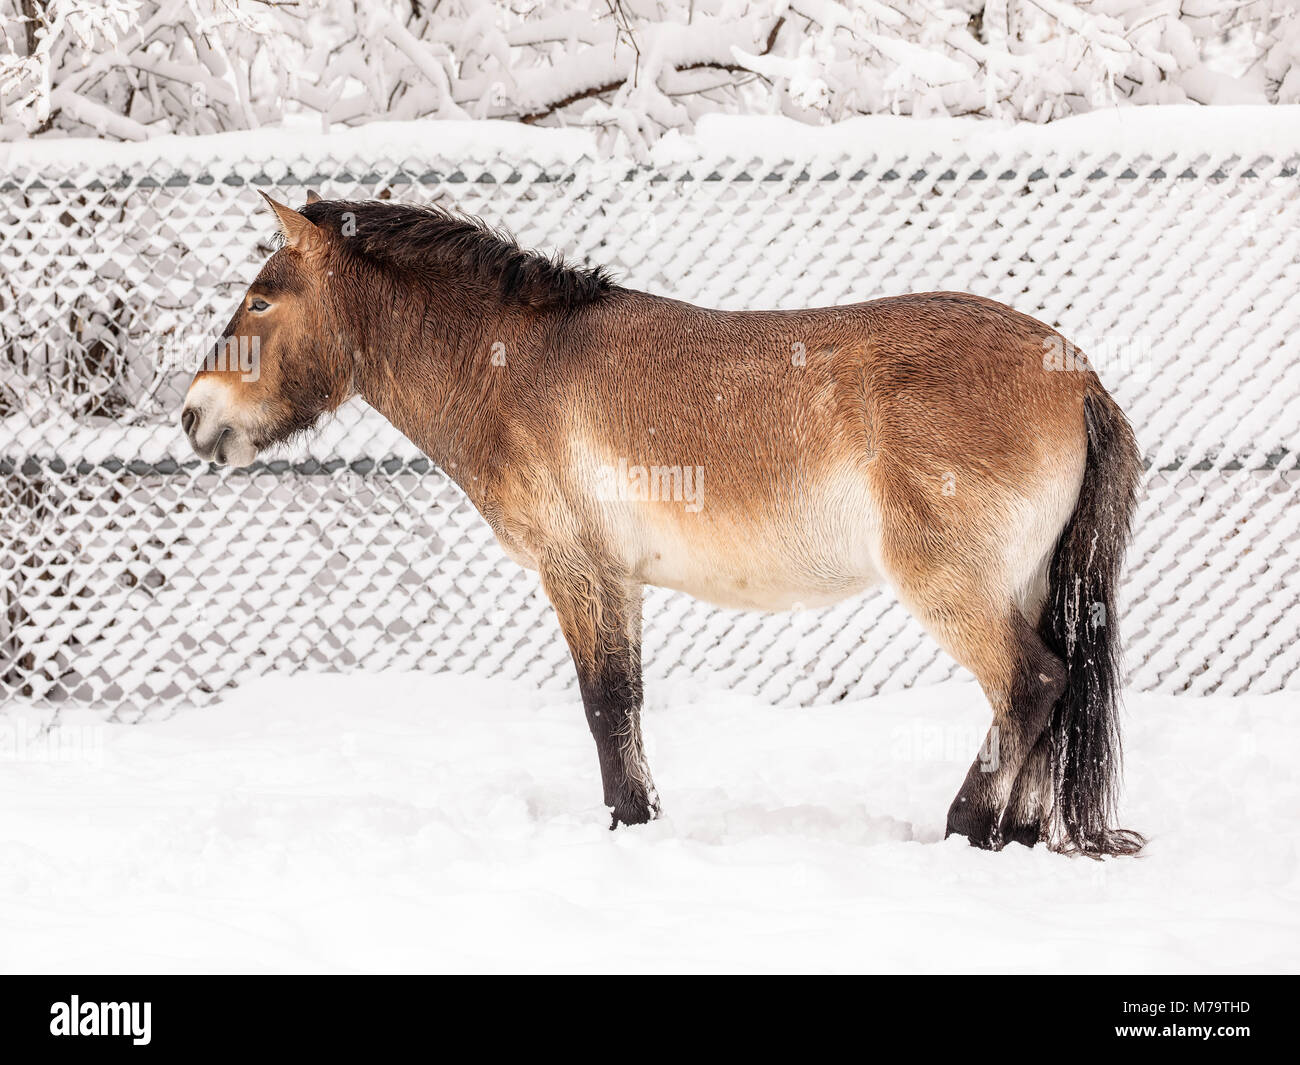 Un cavallo di Przewalski o Dzungarian, Equus ferus przewalskii, una rara in via di estinzione Wild Horse, Assiniboine Park Zoo, Winnipeg, Manitoba, Canada. Foto Stock